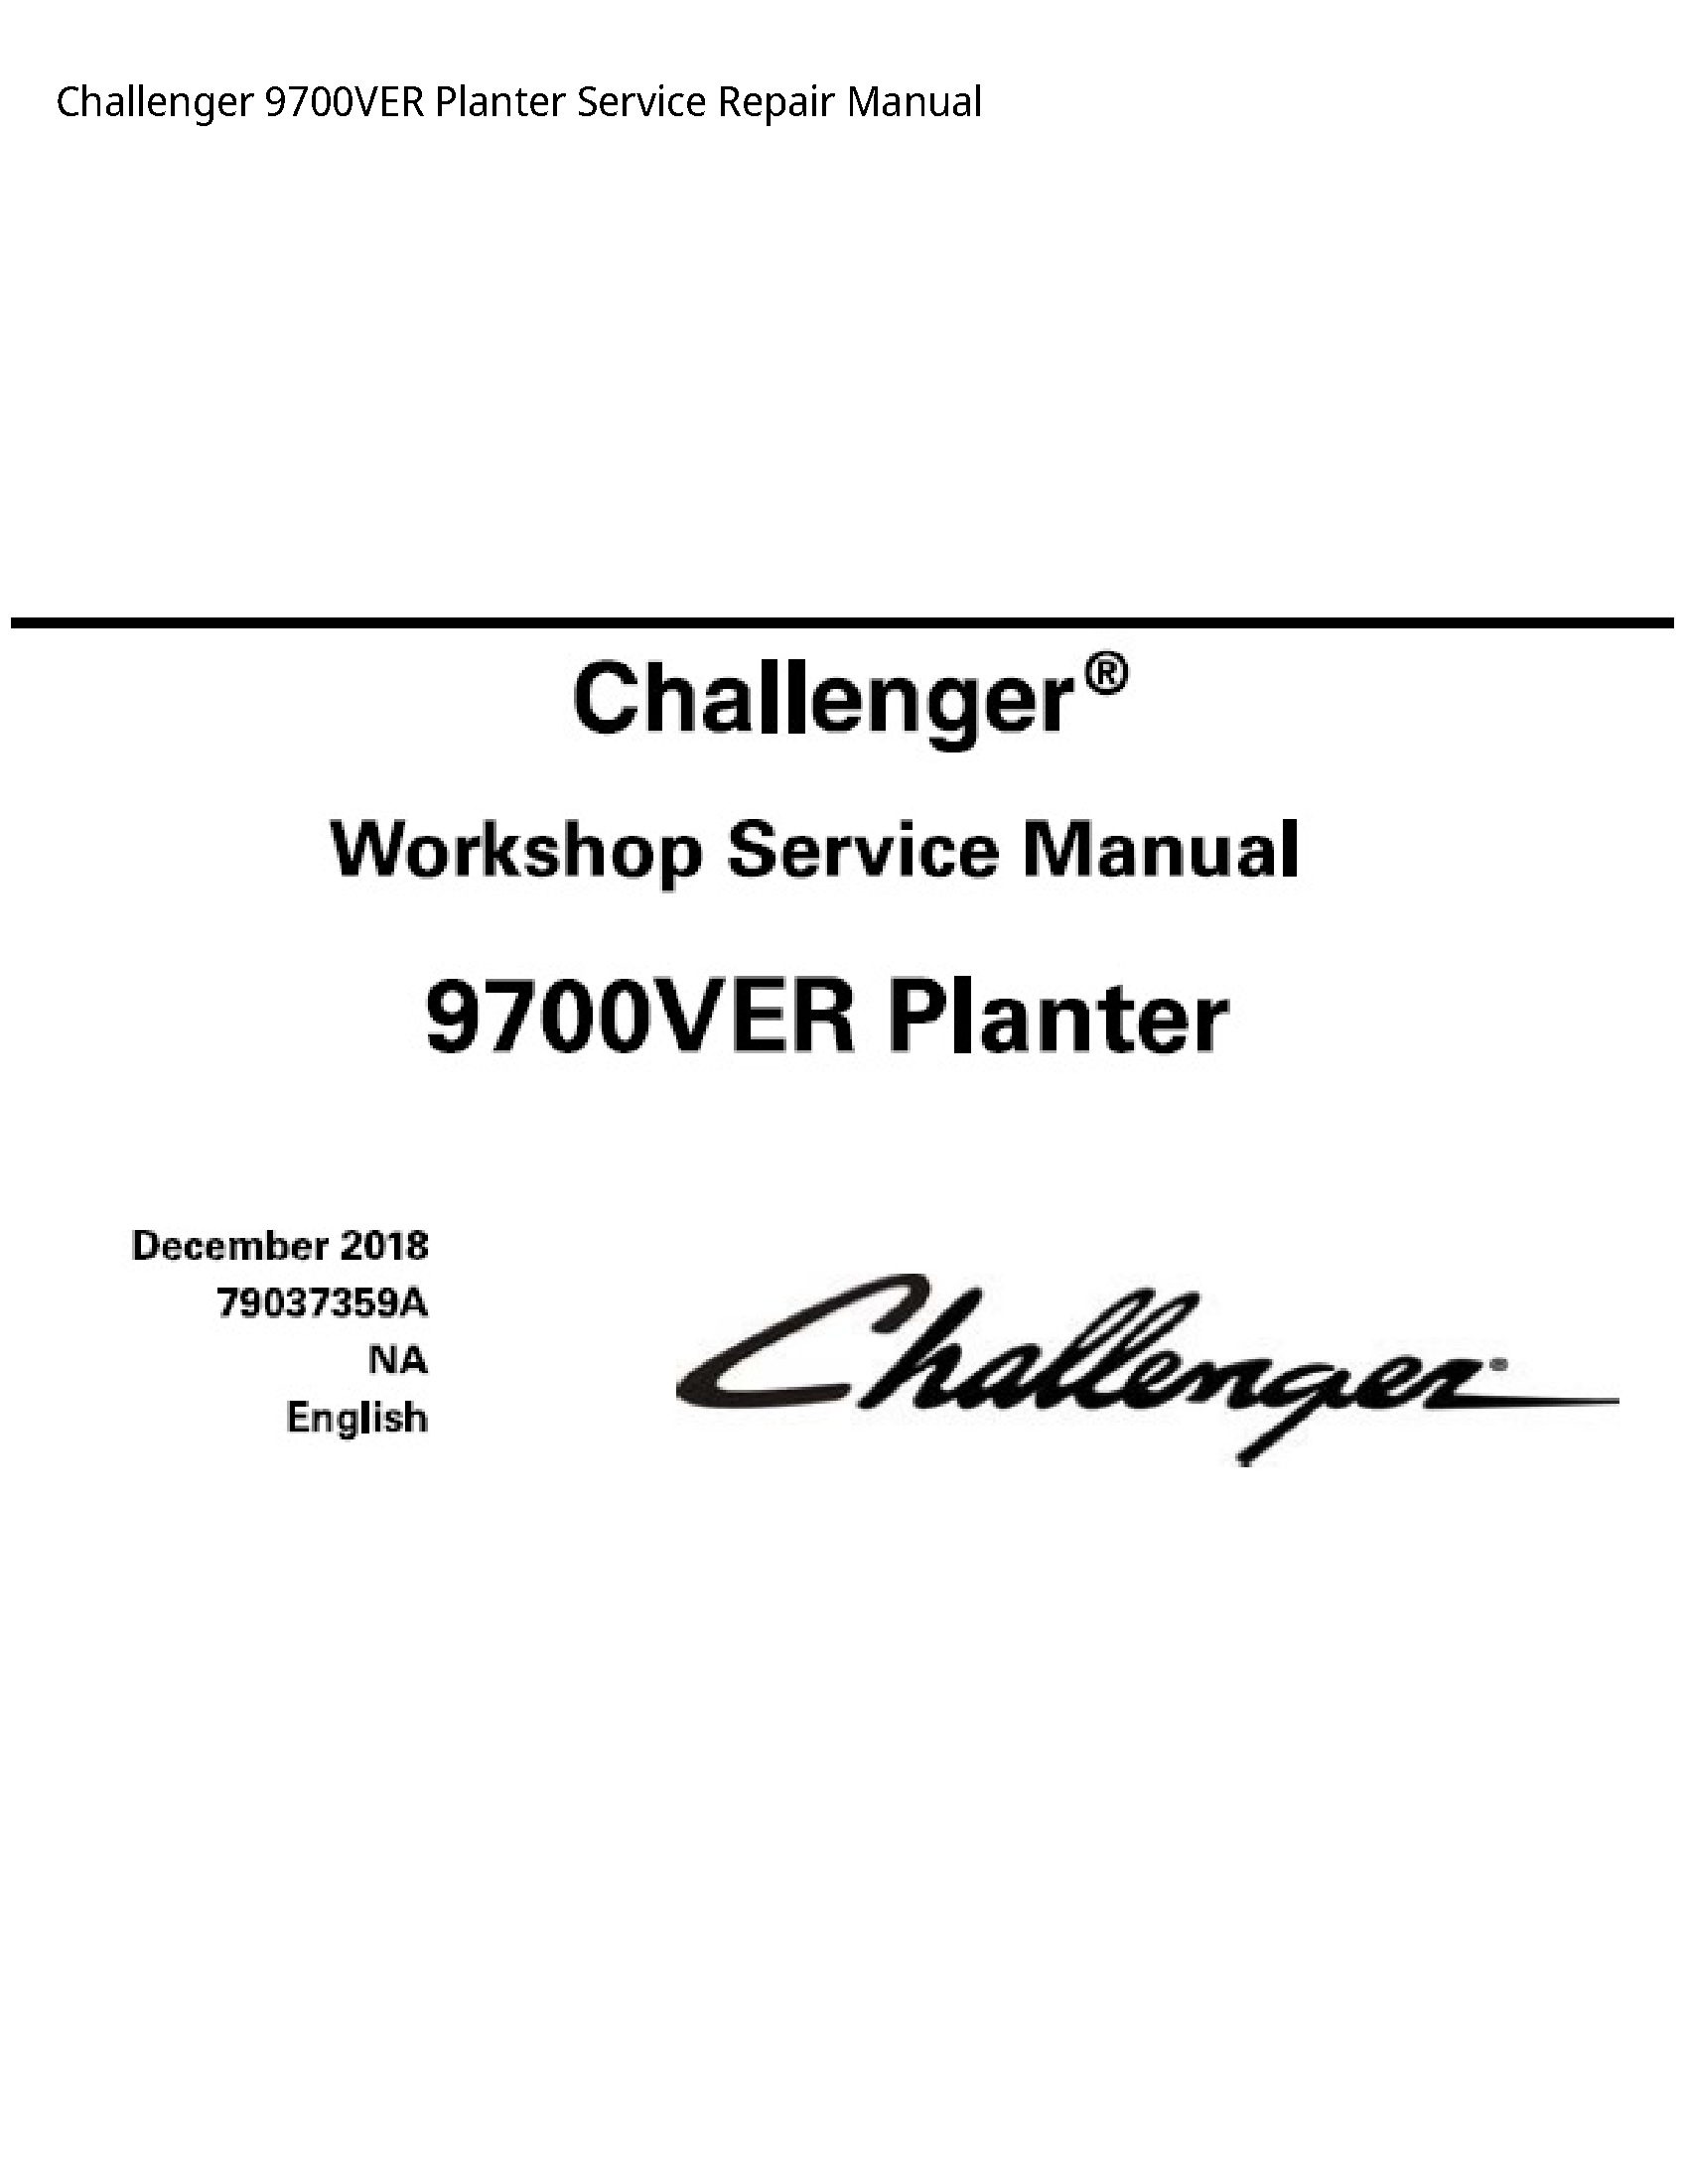 Challenger 9700VER Planter manual